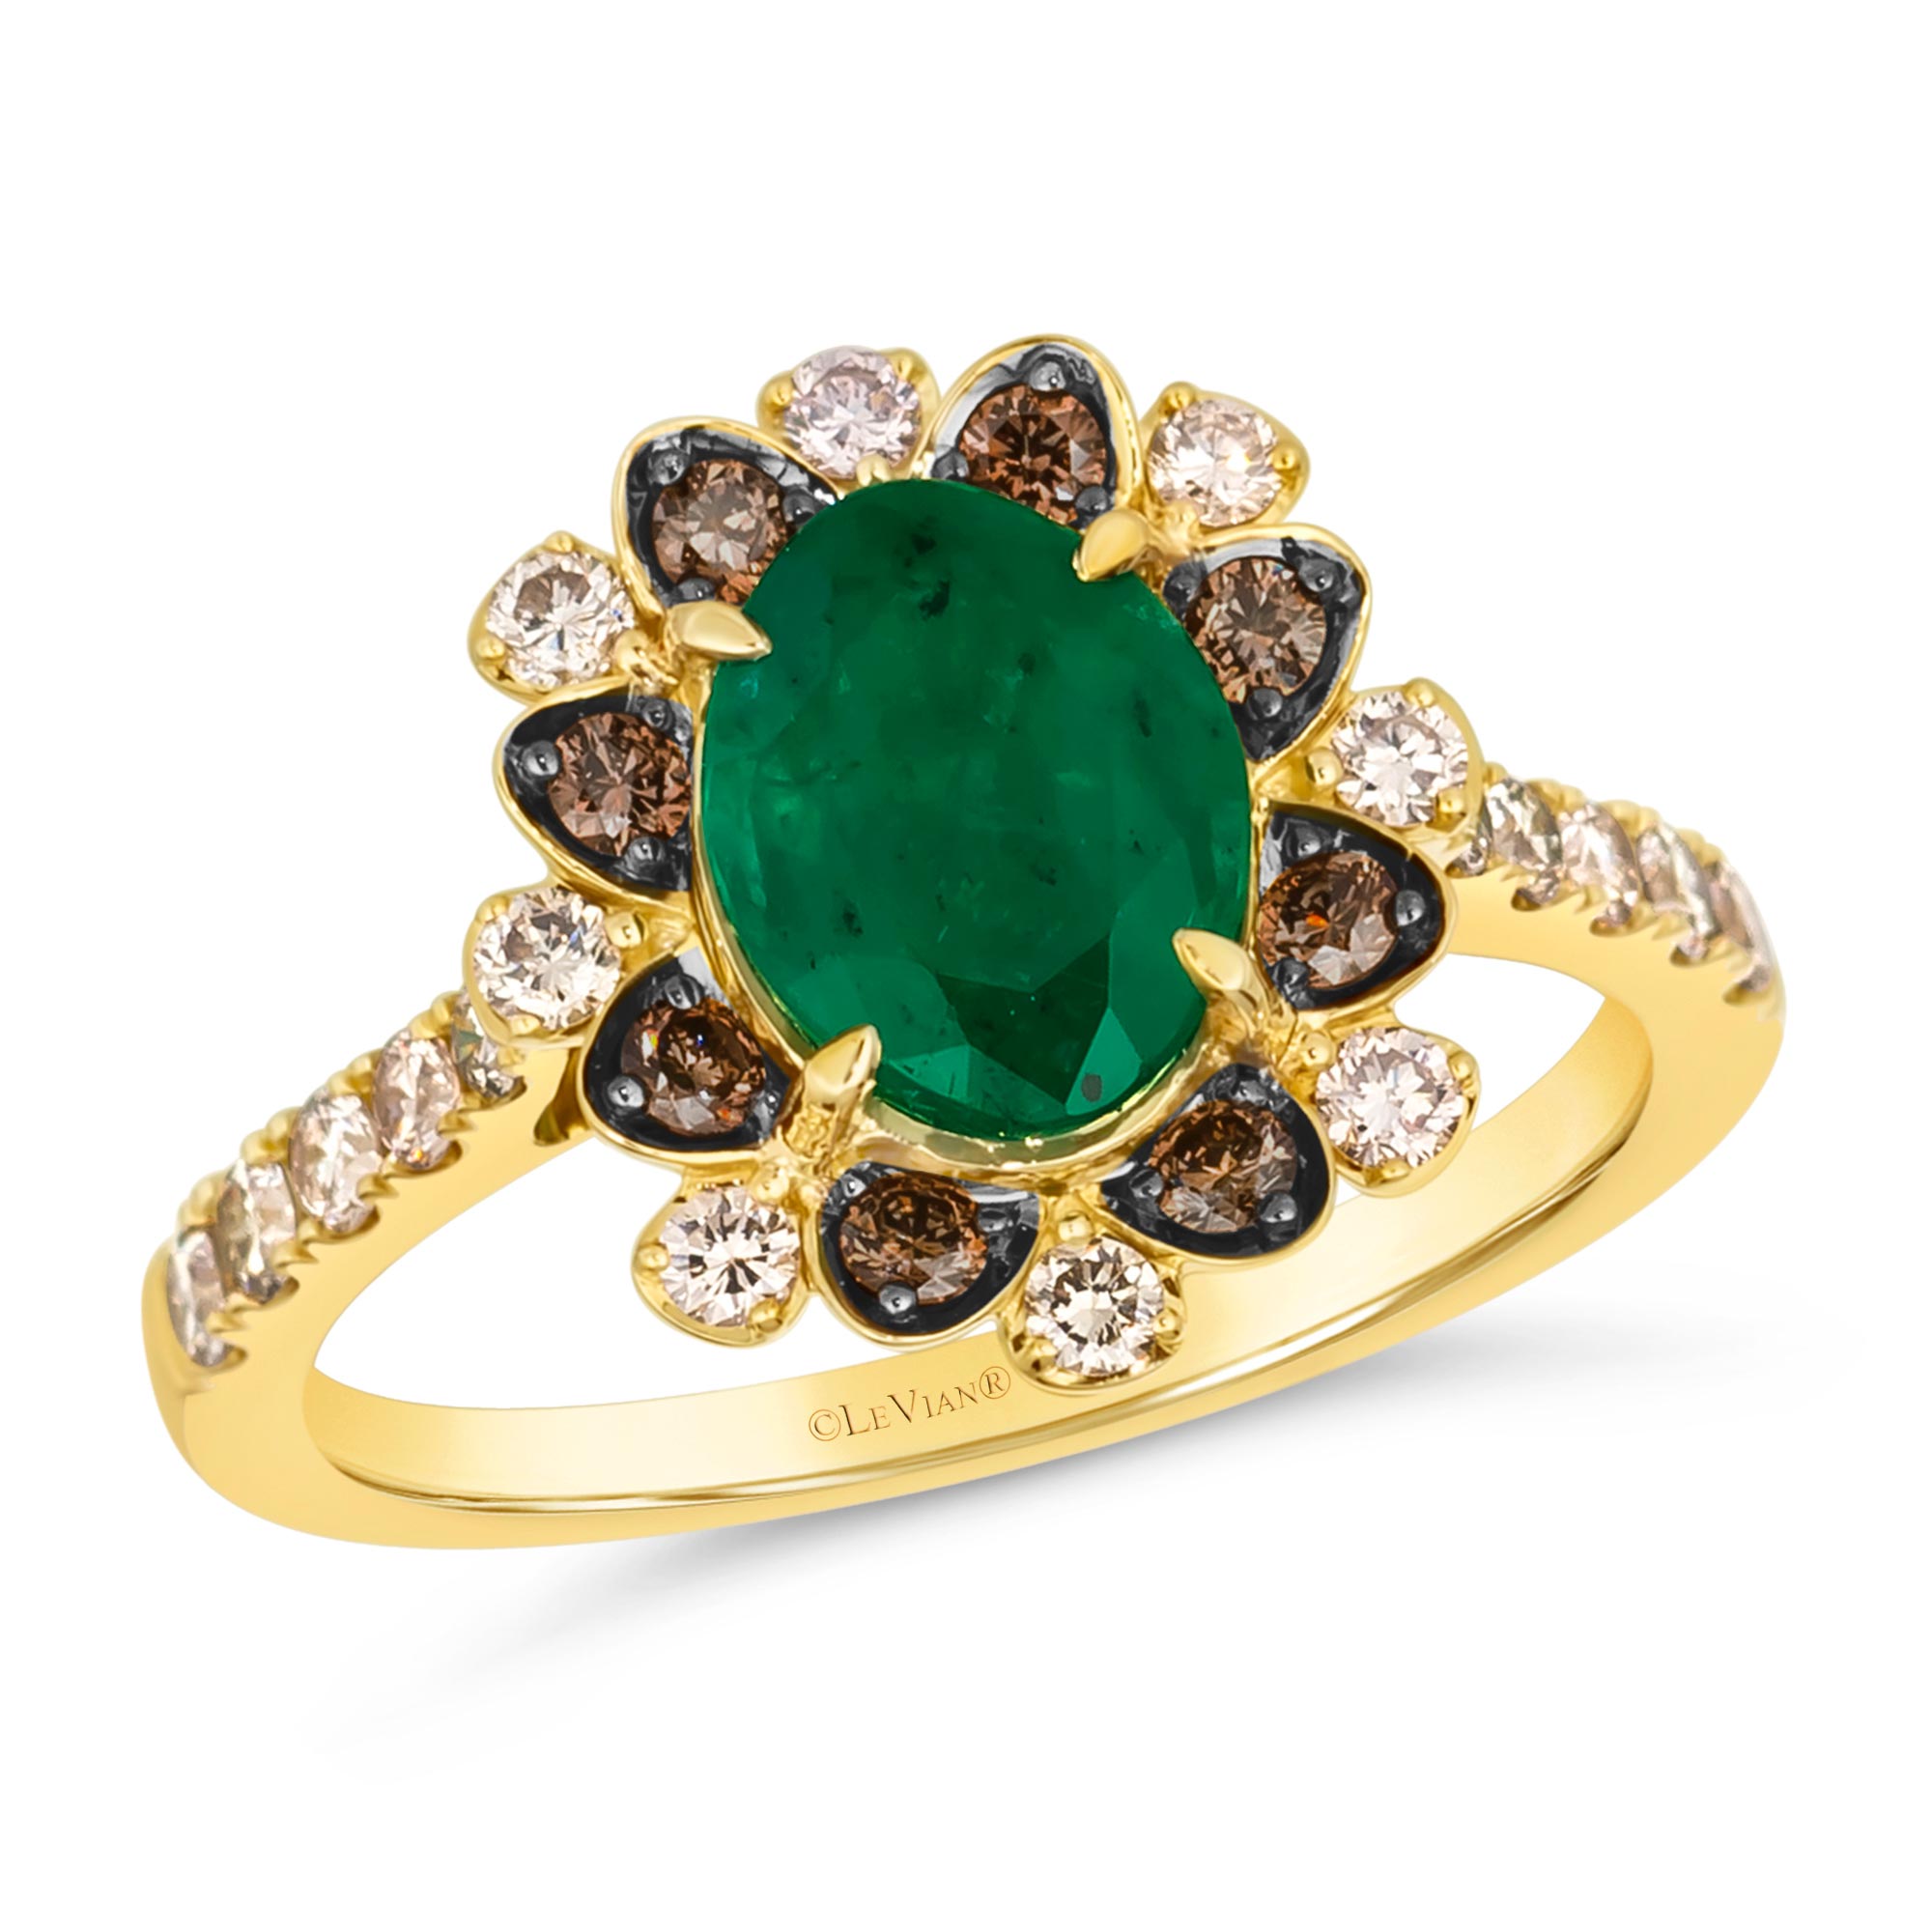 Le Vian(R) Costa Smeralda Emeralds(tm) 5/8ctw Nude Diamonds(tm) and Chocolate Diamonds(R) 14k Honey Gold(tm) Ring | Size 7 -  LACG 17